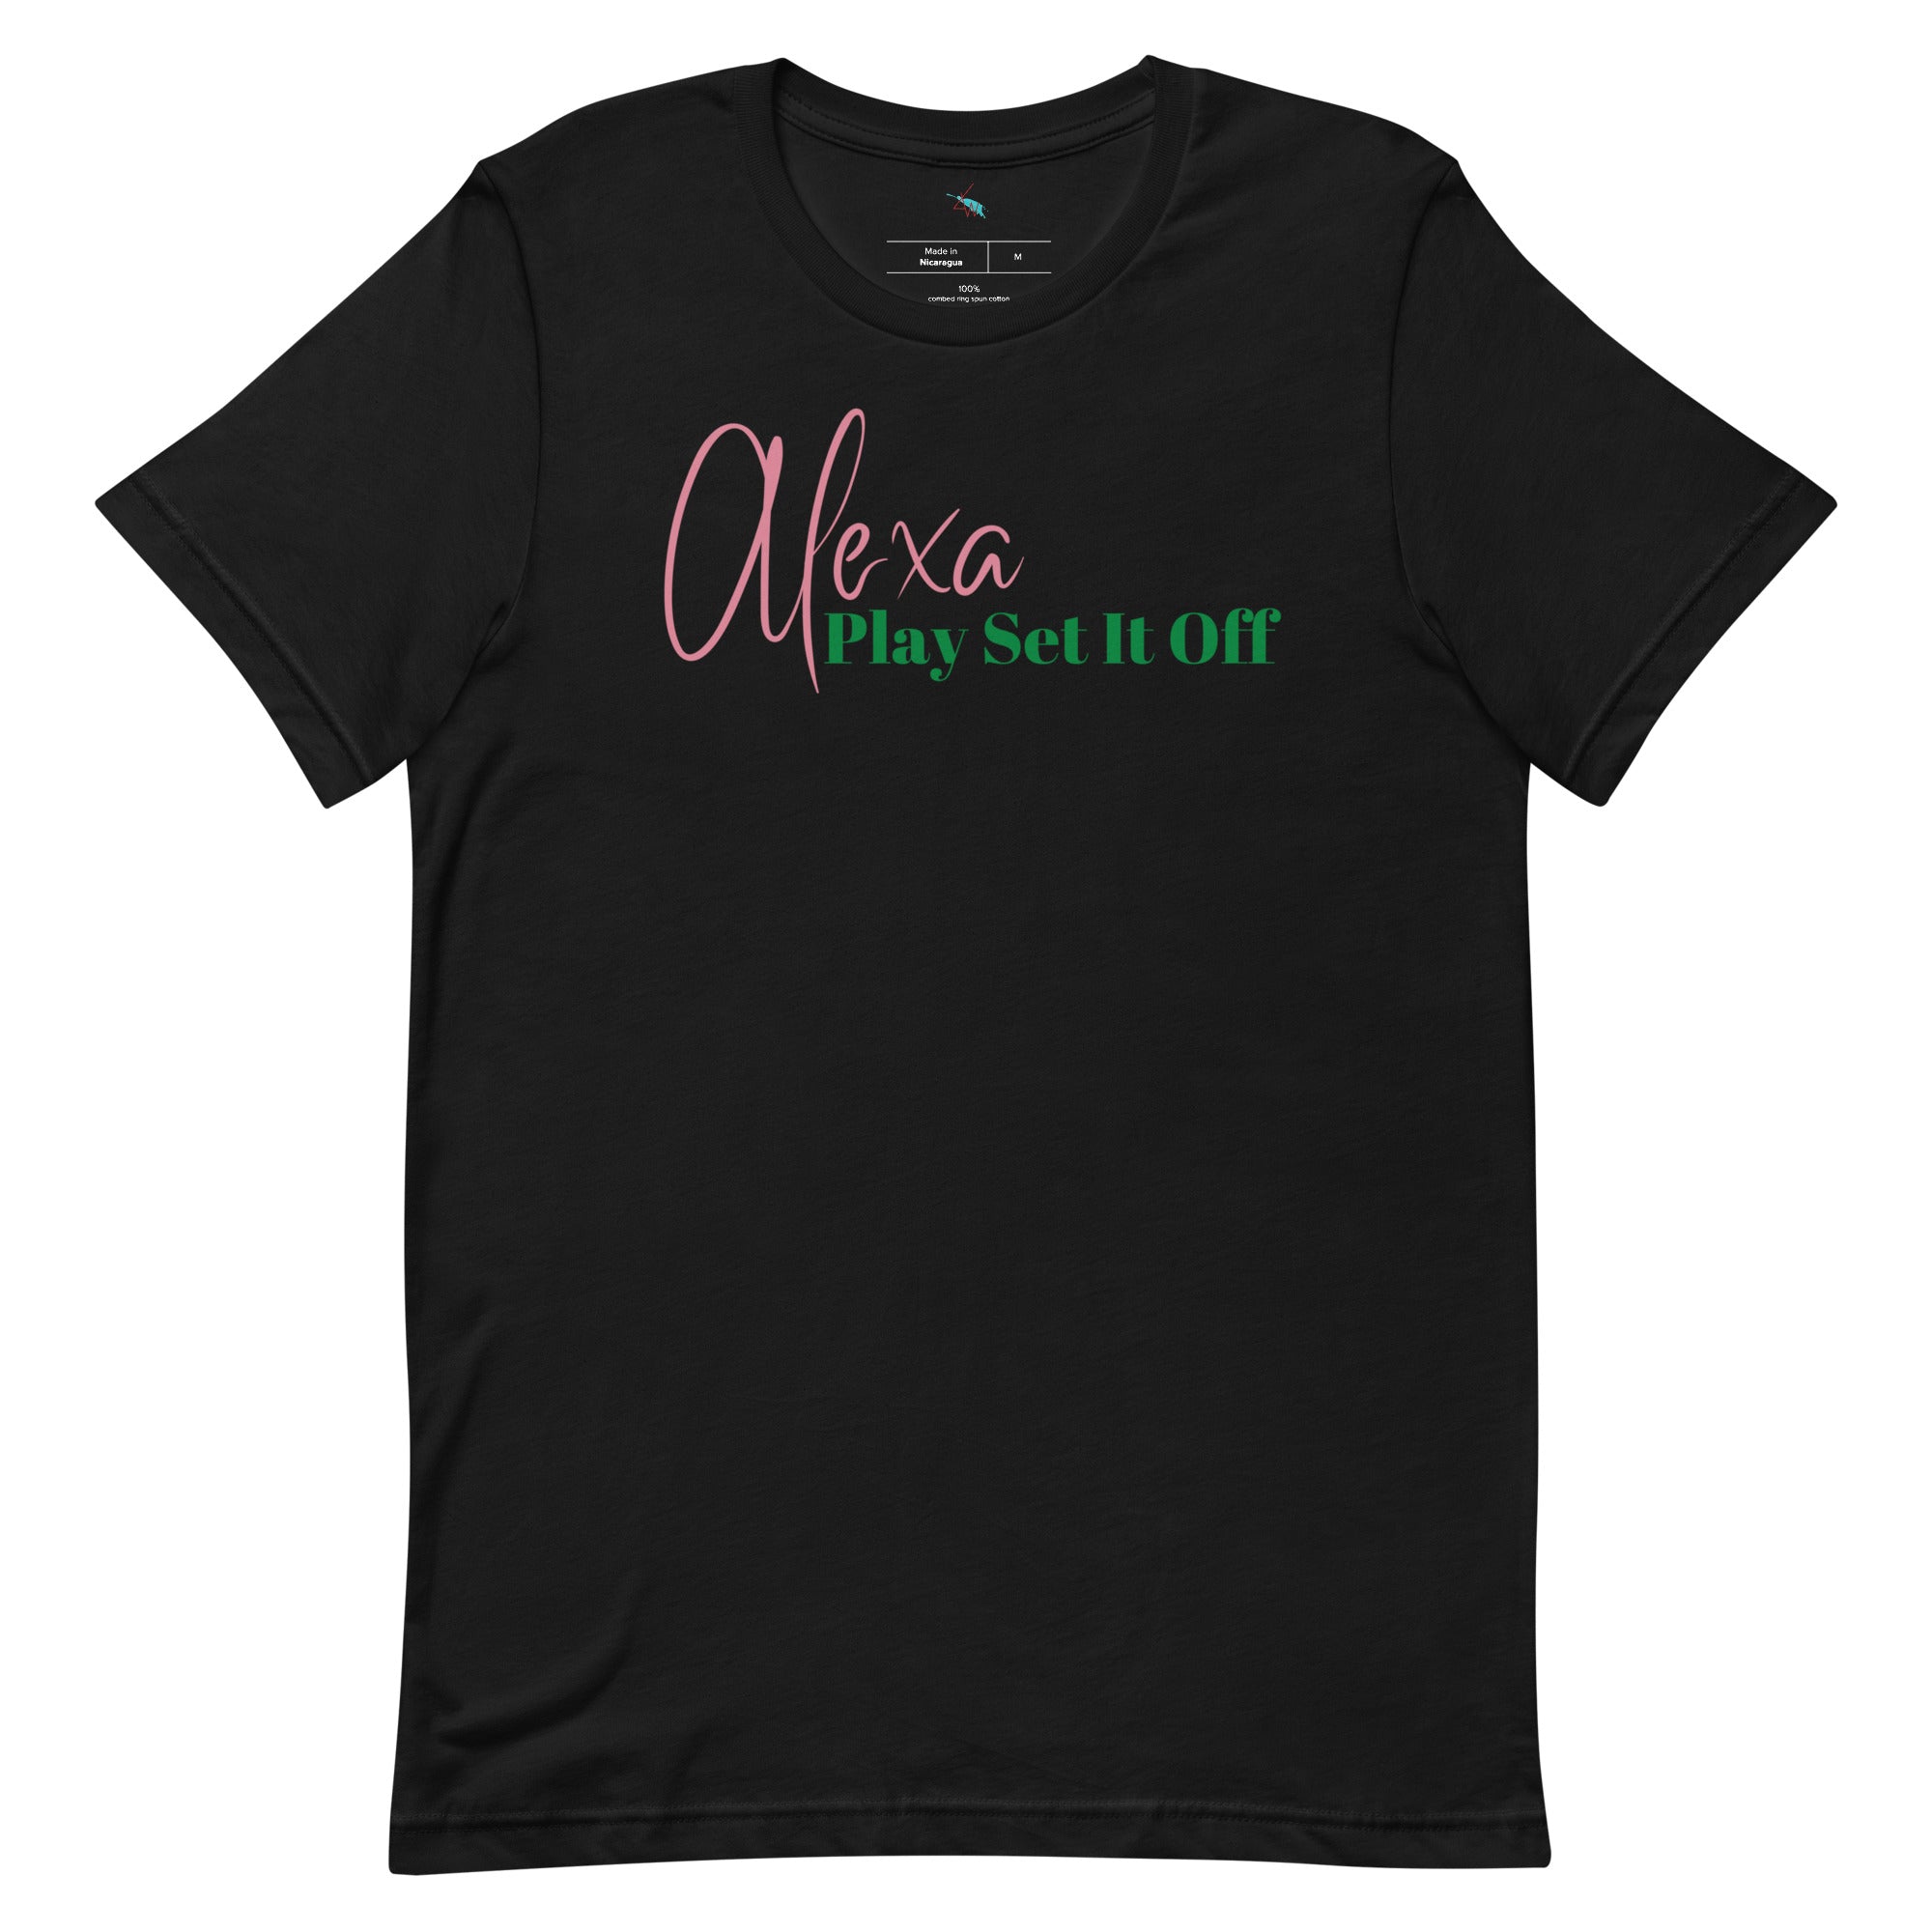 Alexa Play Set It Off t-shirt